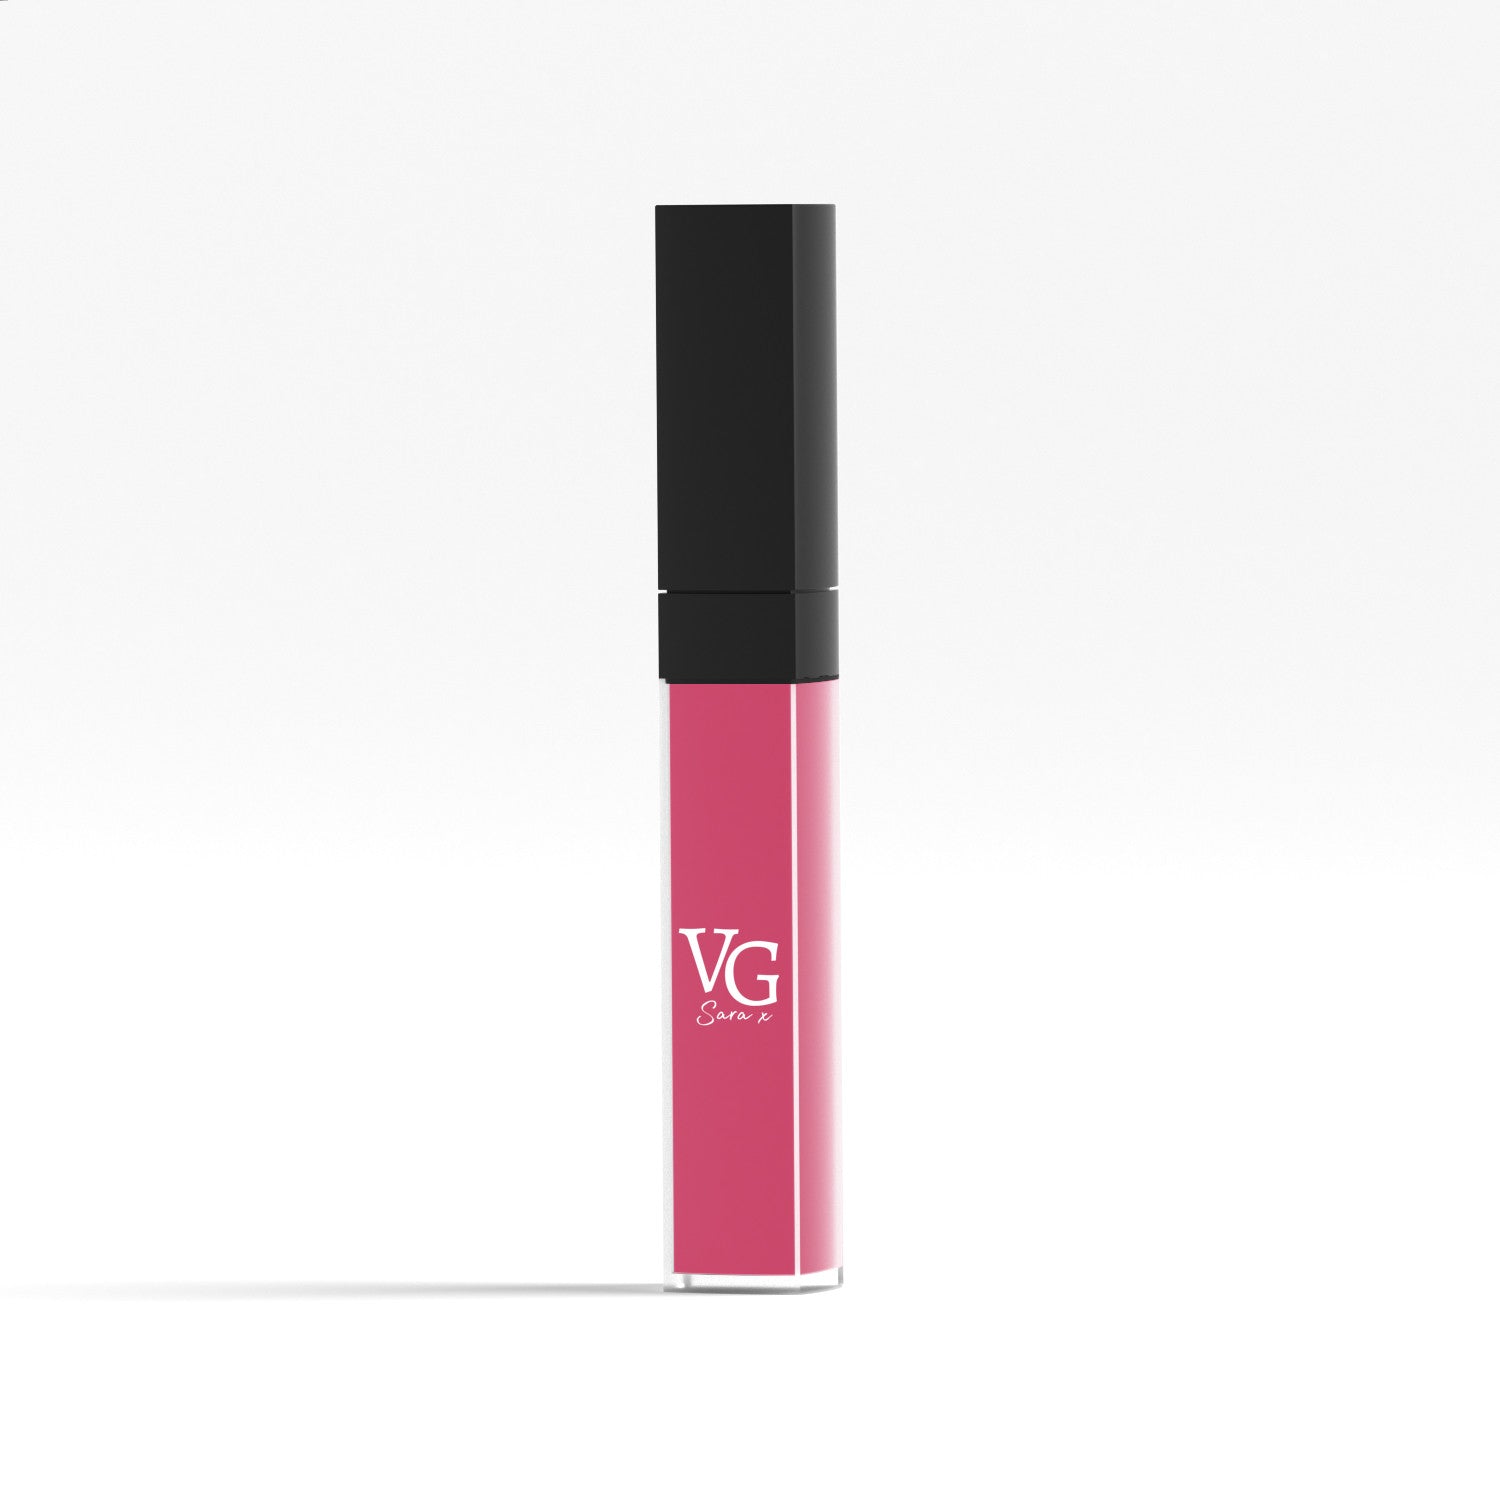 Close-up of VG vegan lipstick with brand imprint